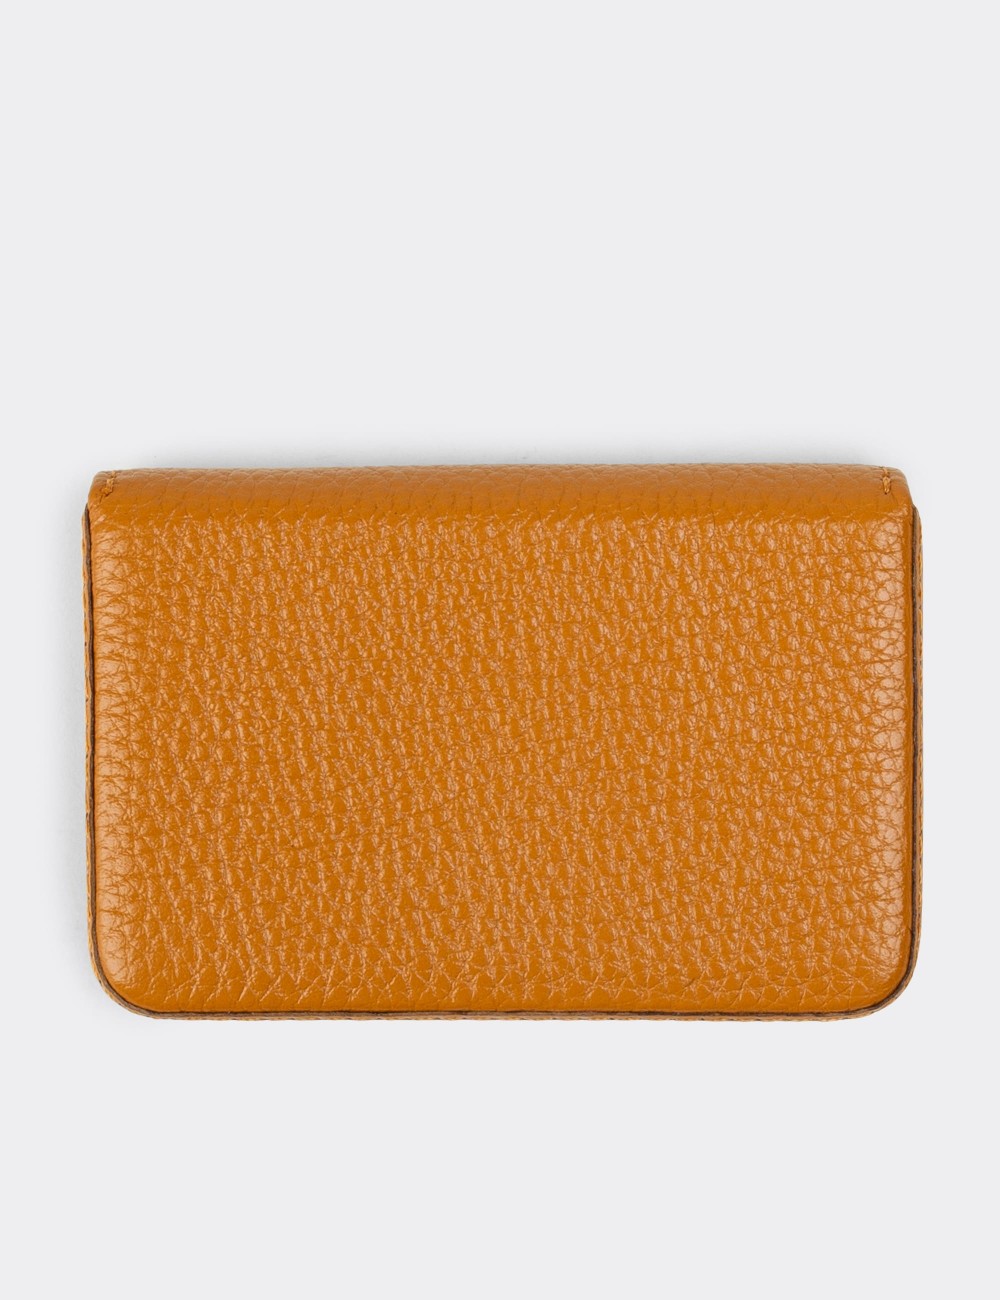  Leather Yellow Men's Wallet - 00522MHRDZ01